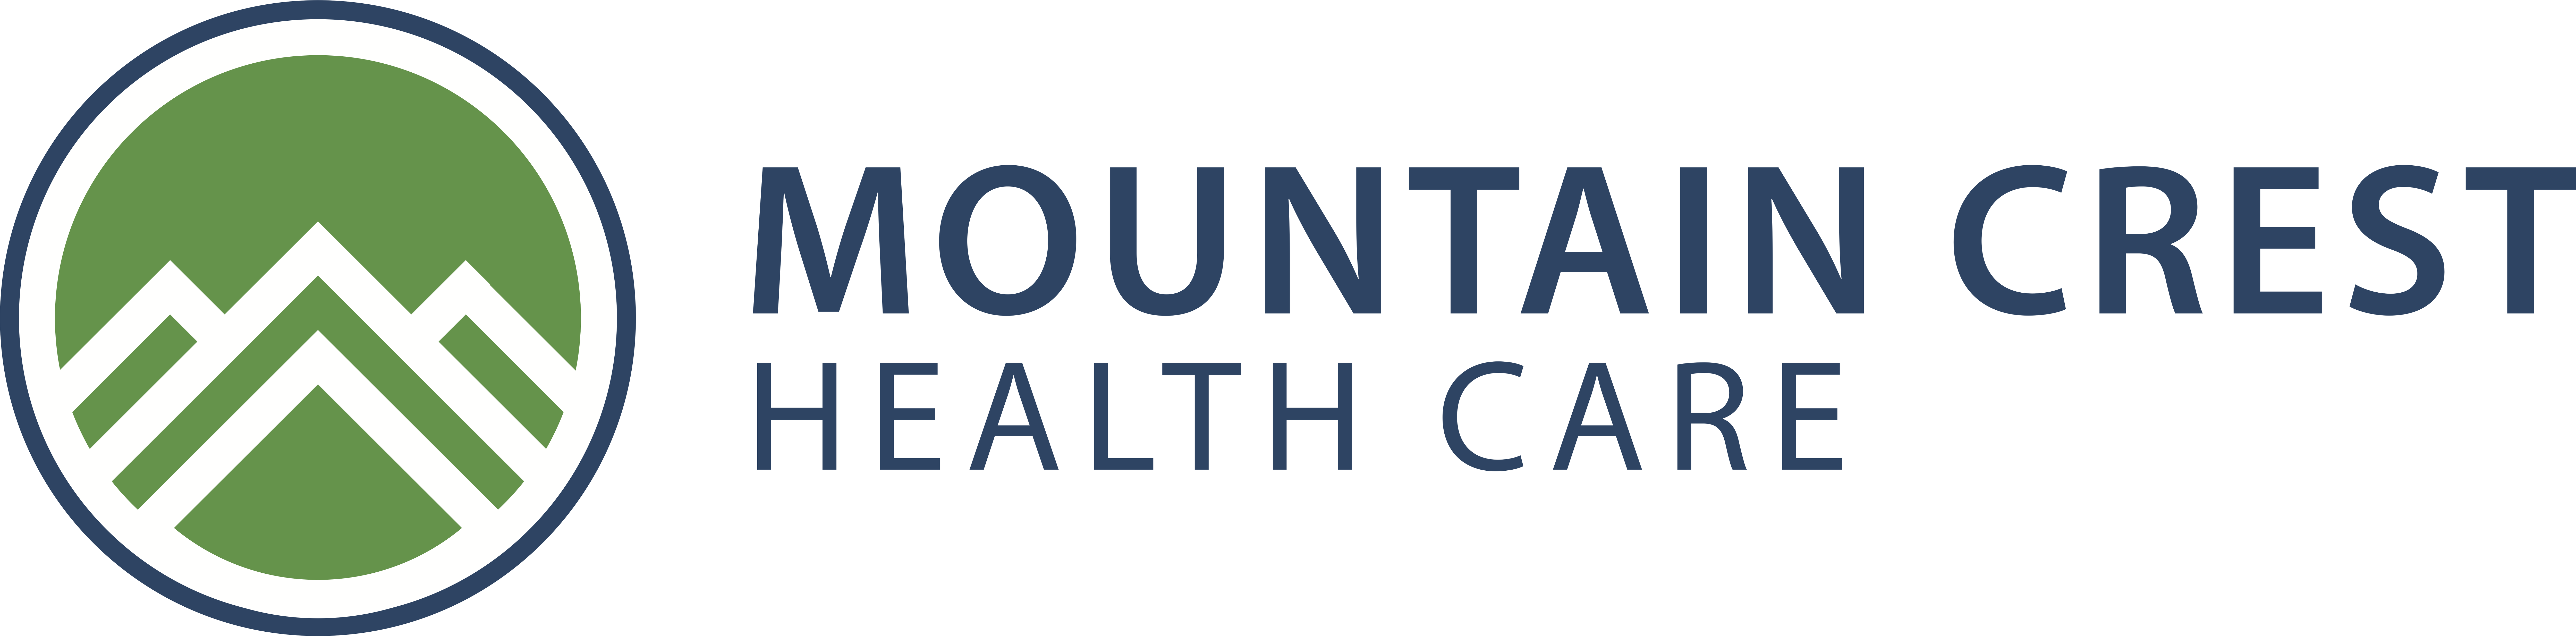 Mountain Crest Health Care